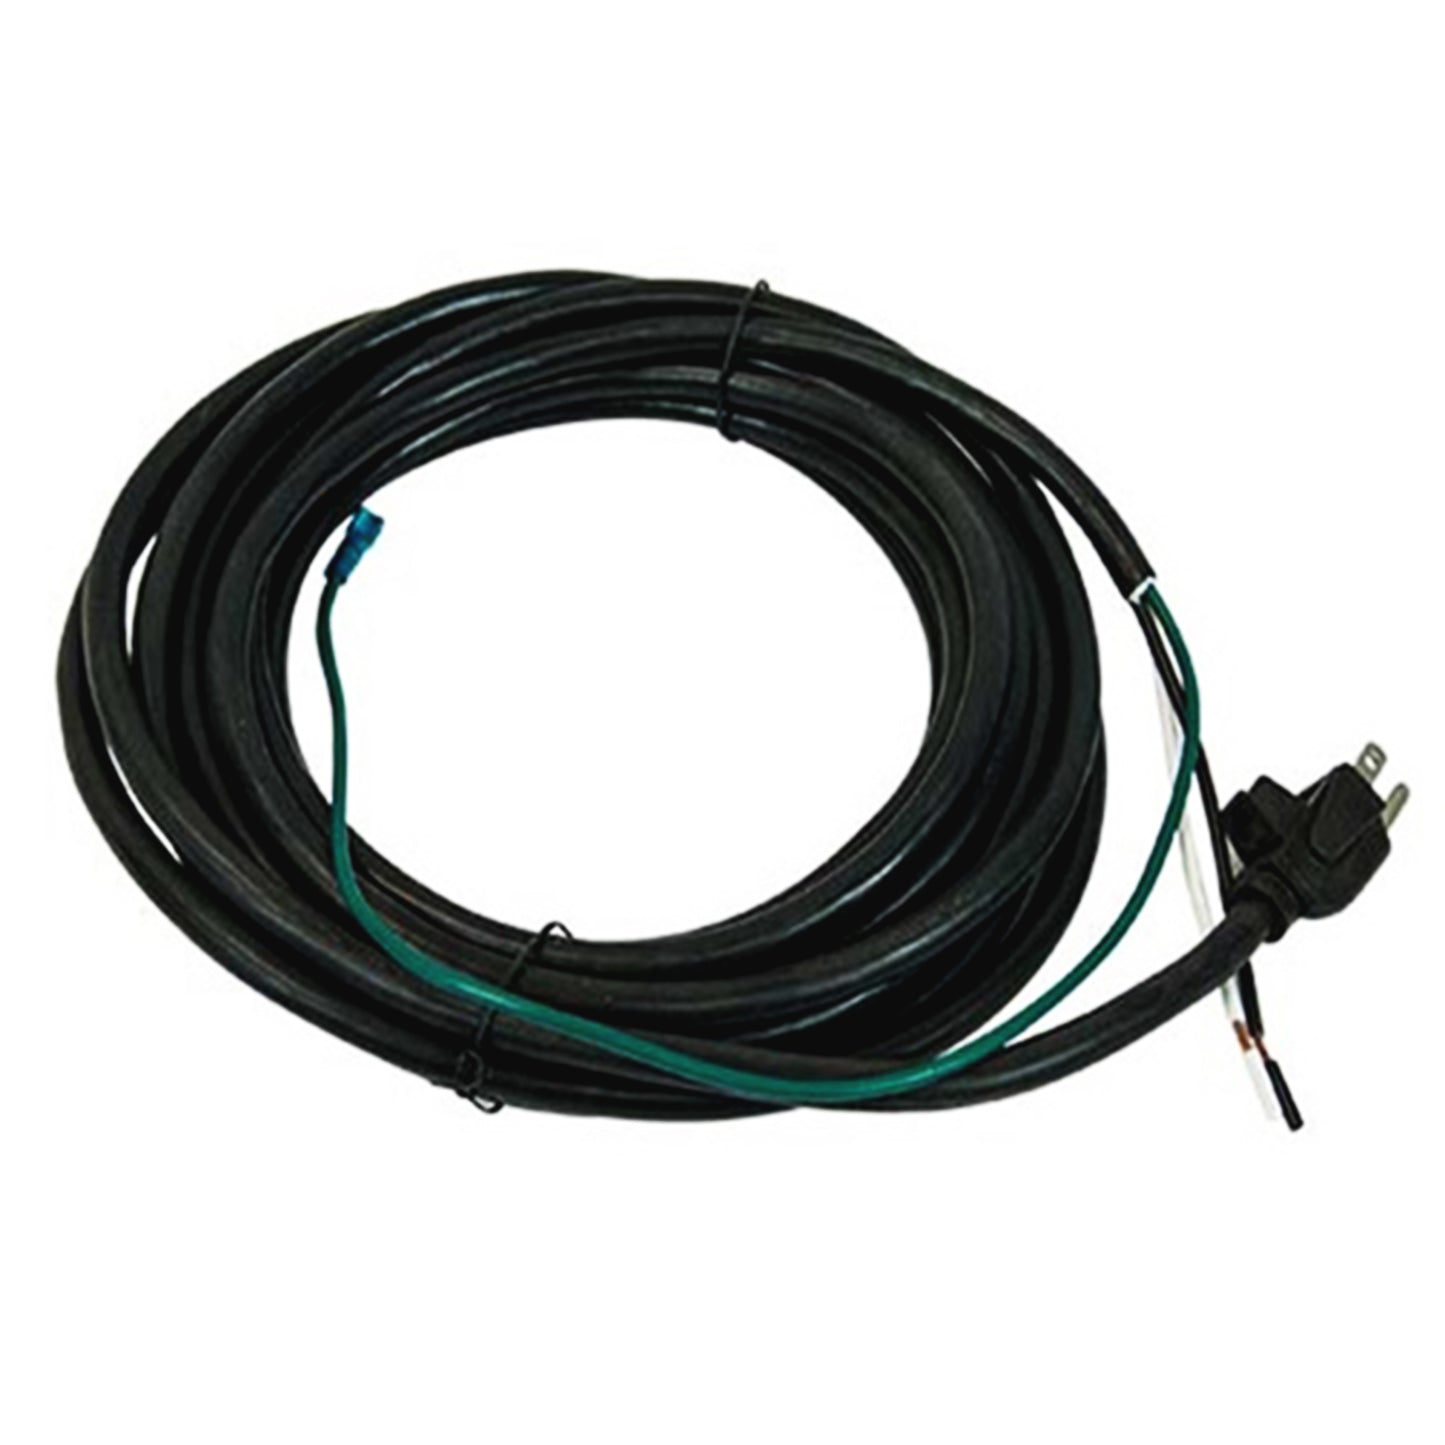 Power Cord for XD-85LH Dehumidifier